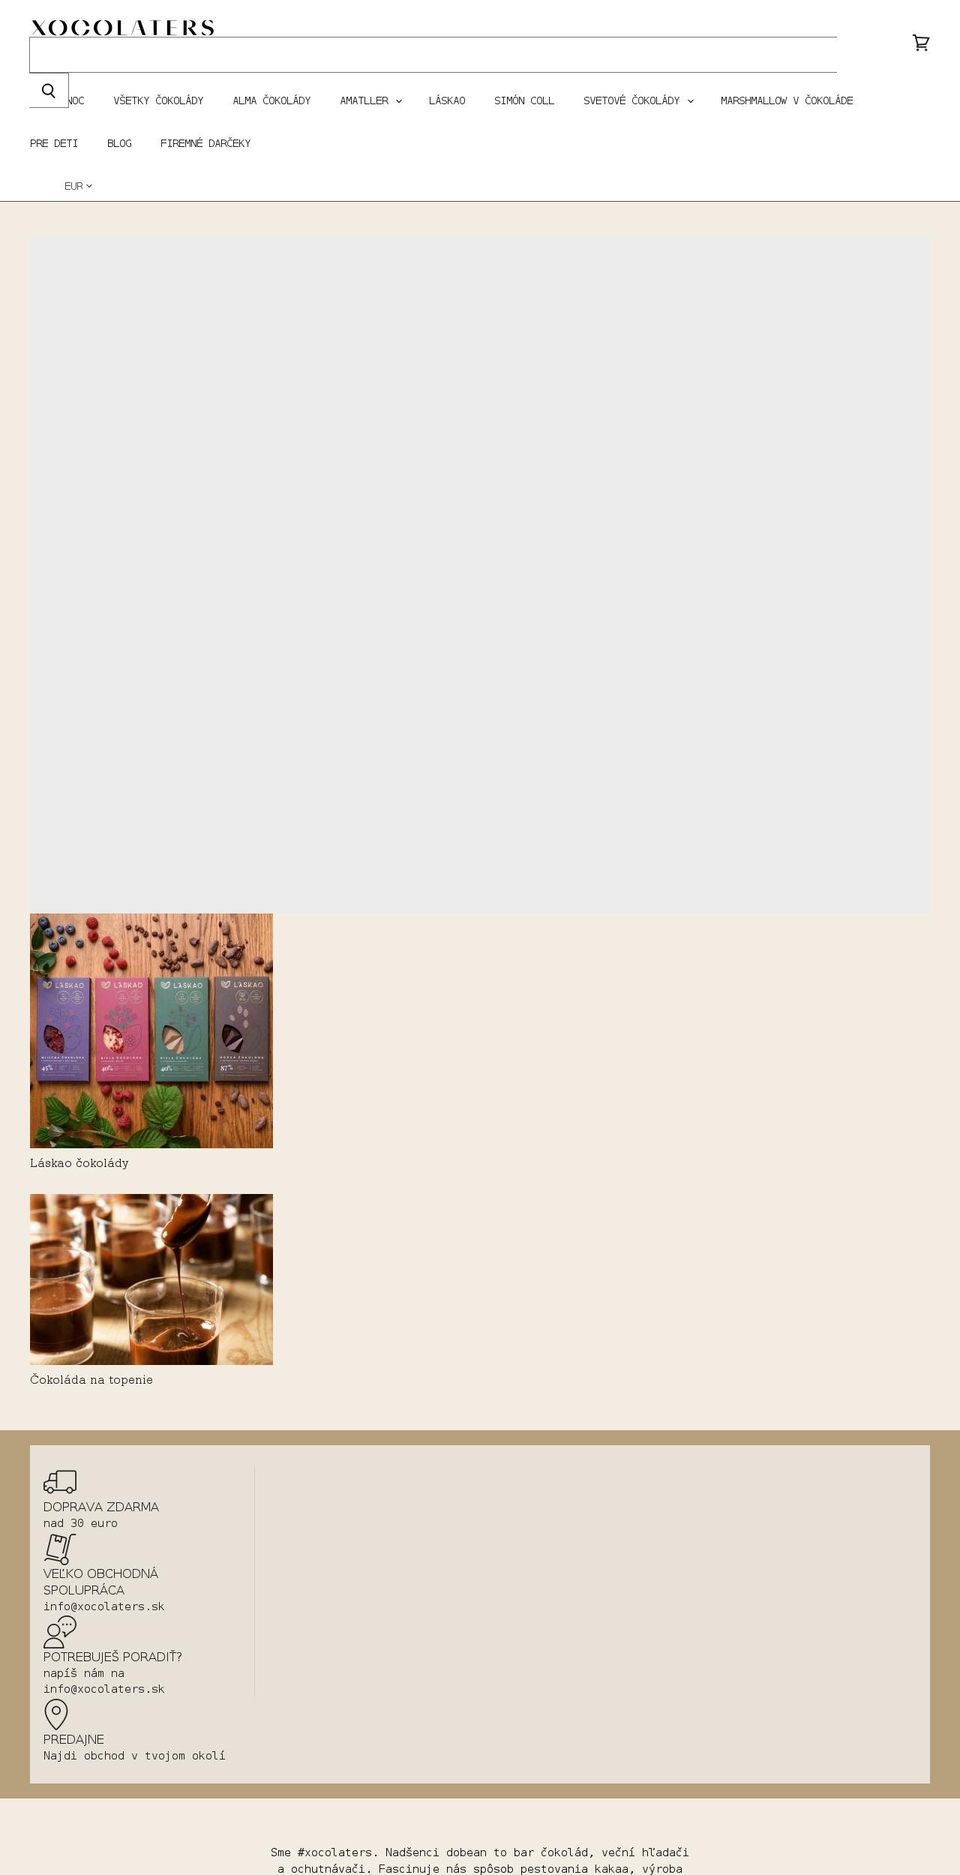 xocolaters.sk shopify website screenshot